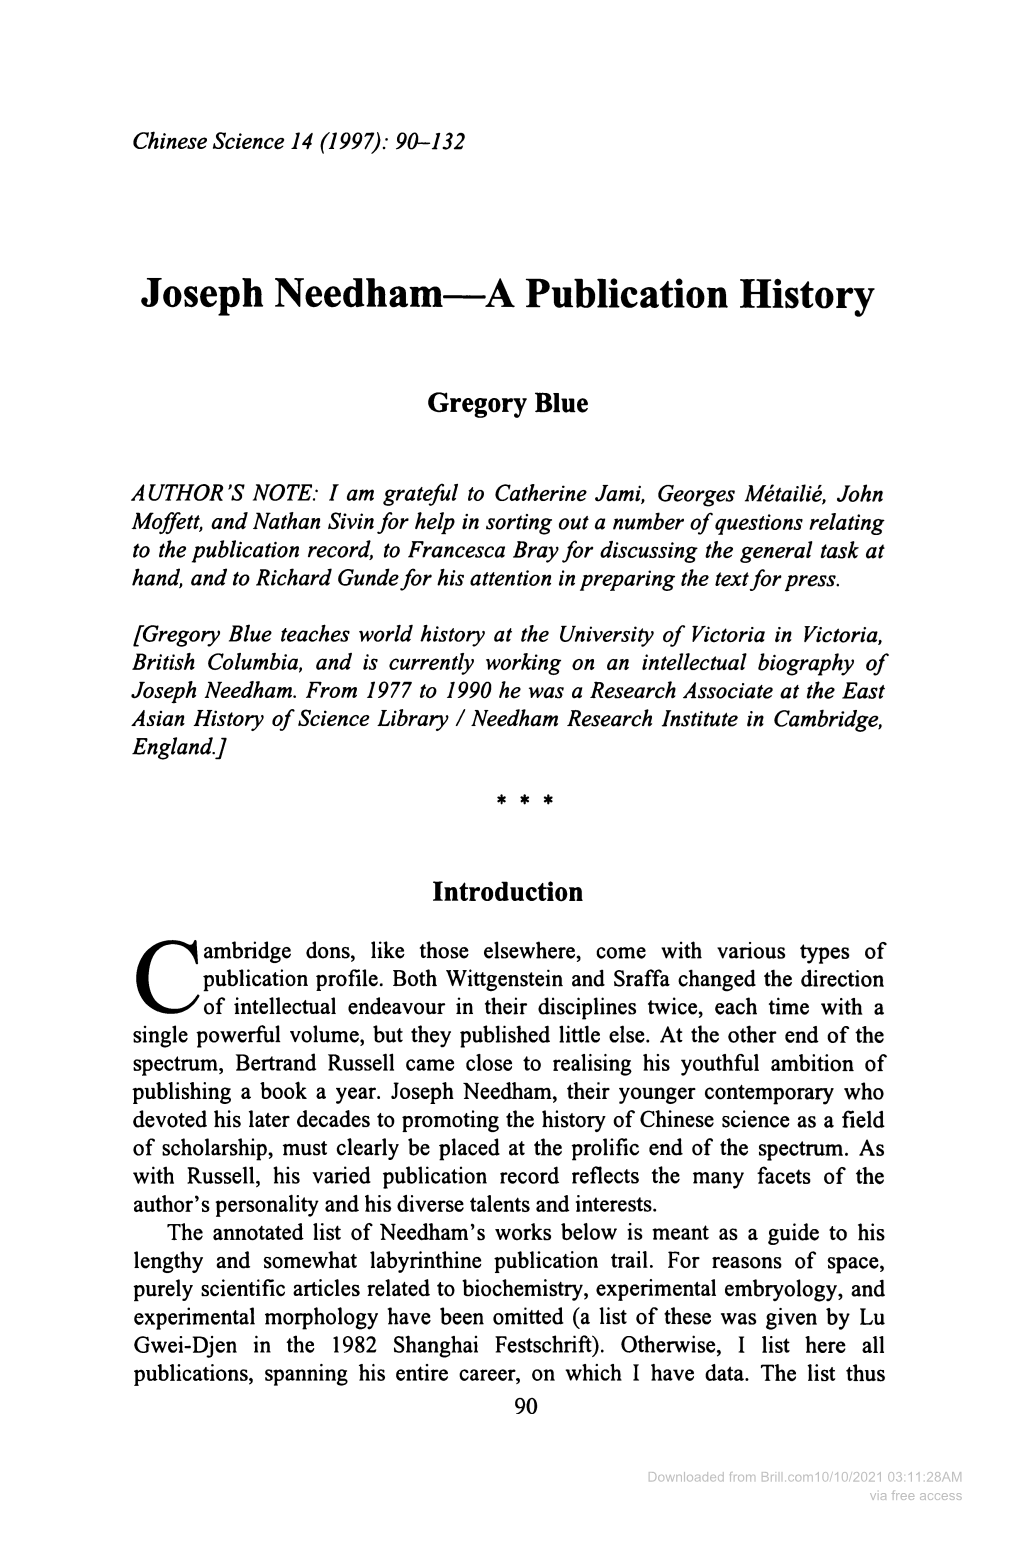 Joseph Needham-A Publication History